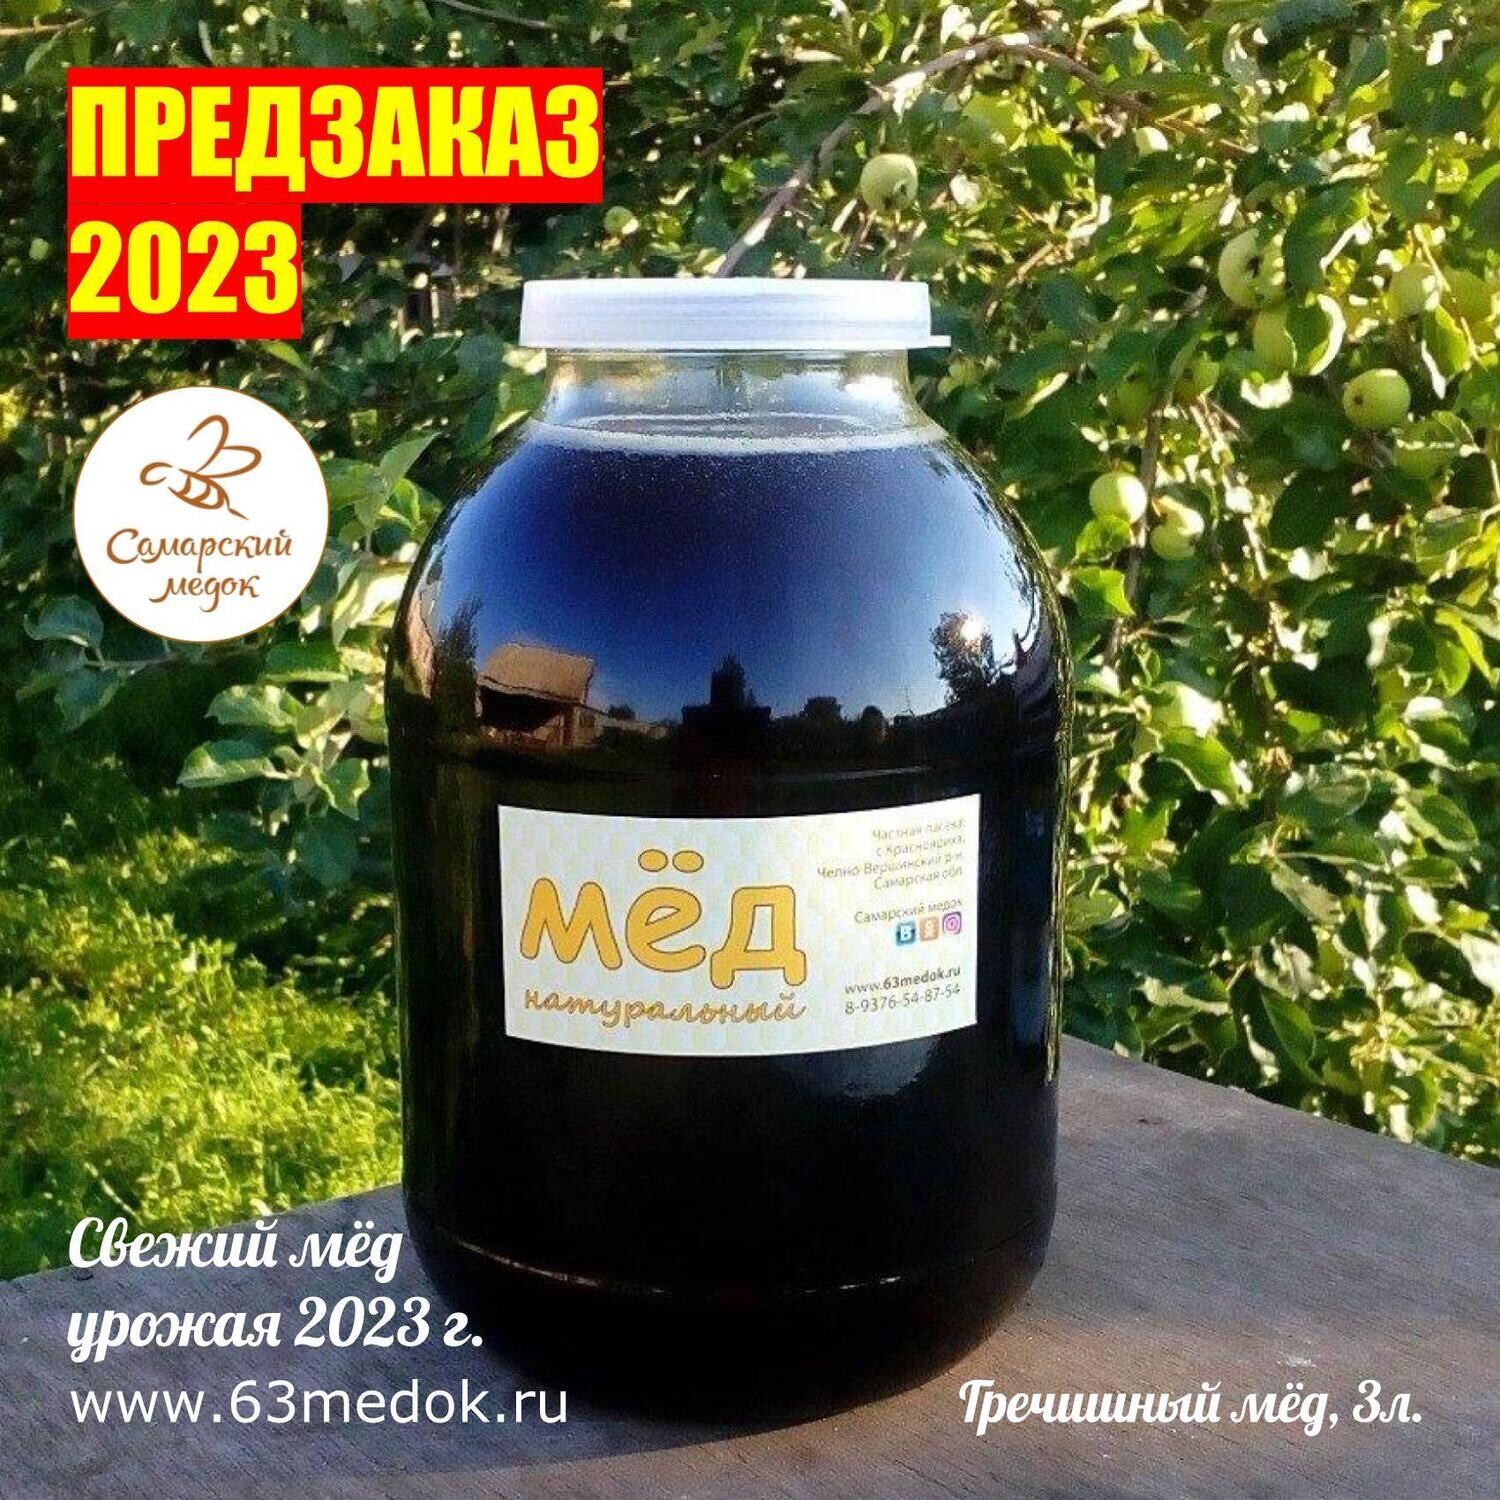 ПРЕДЗАКАЗ 2023 - Гречишный свежий мёд 3 л.